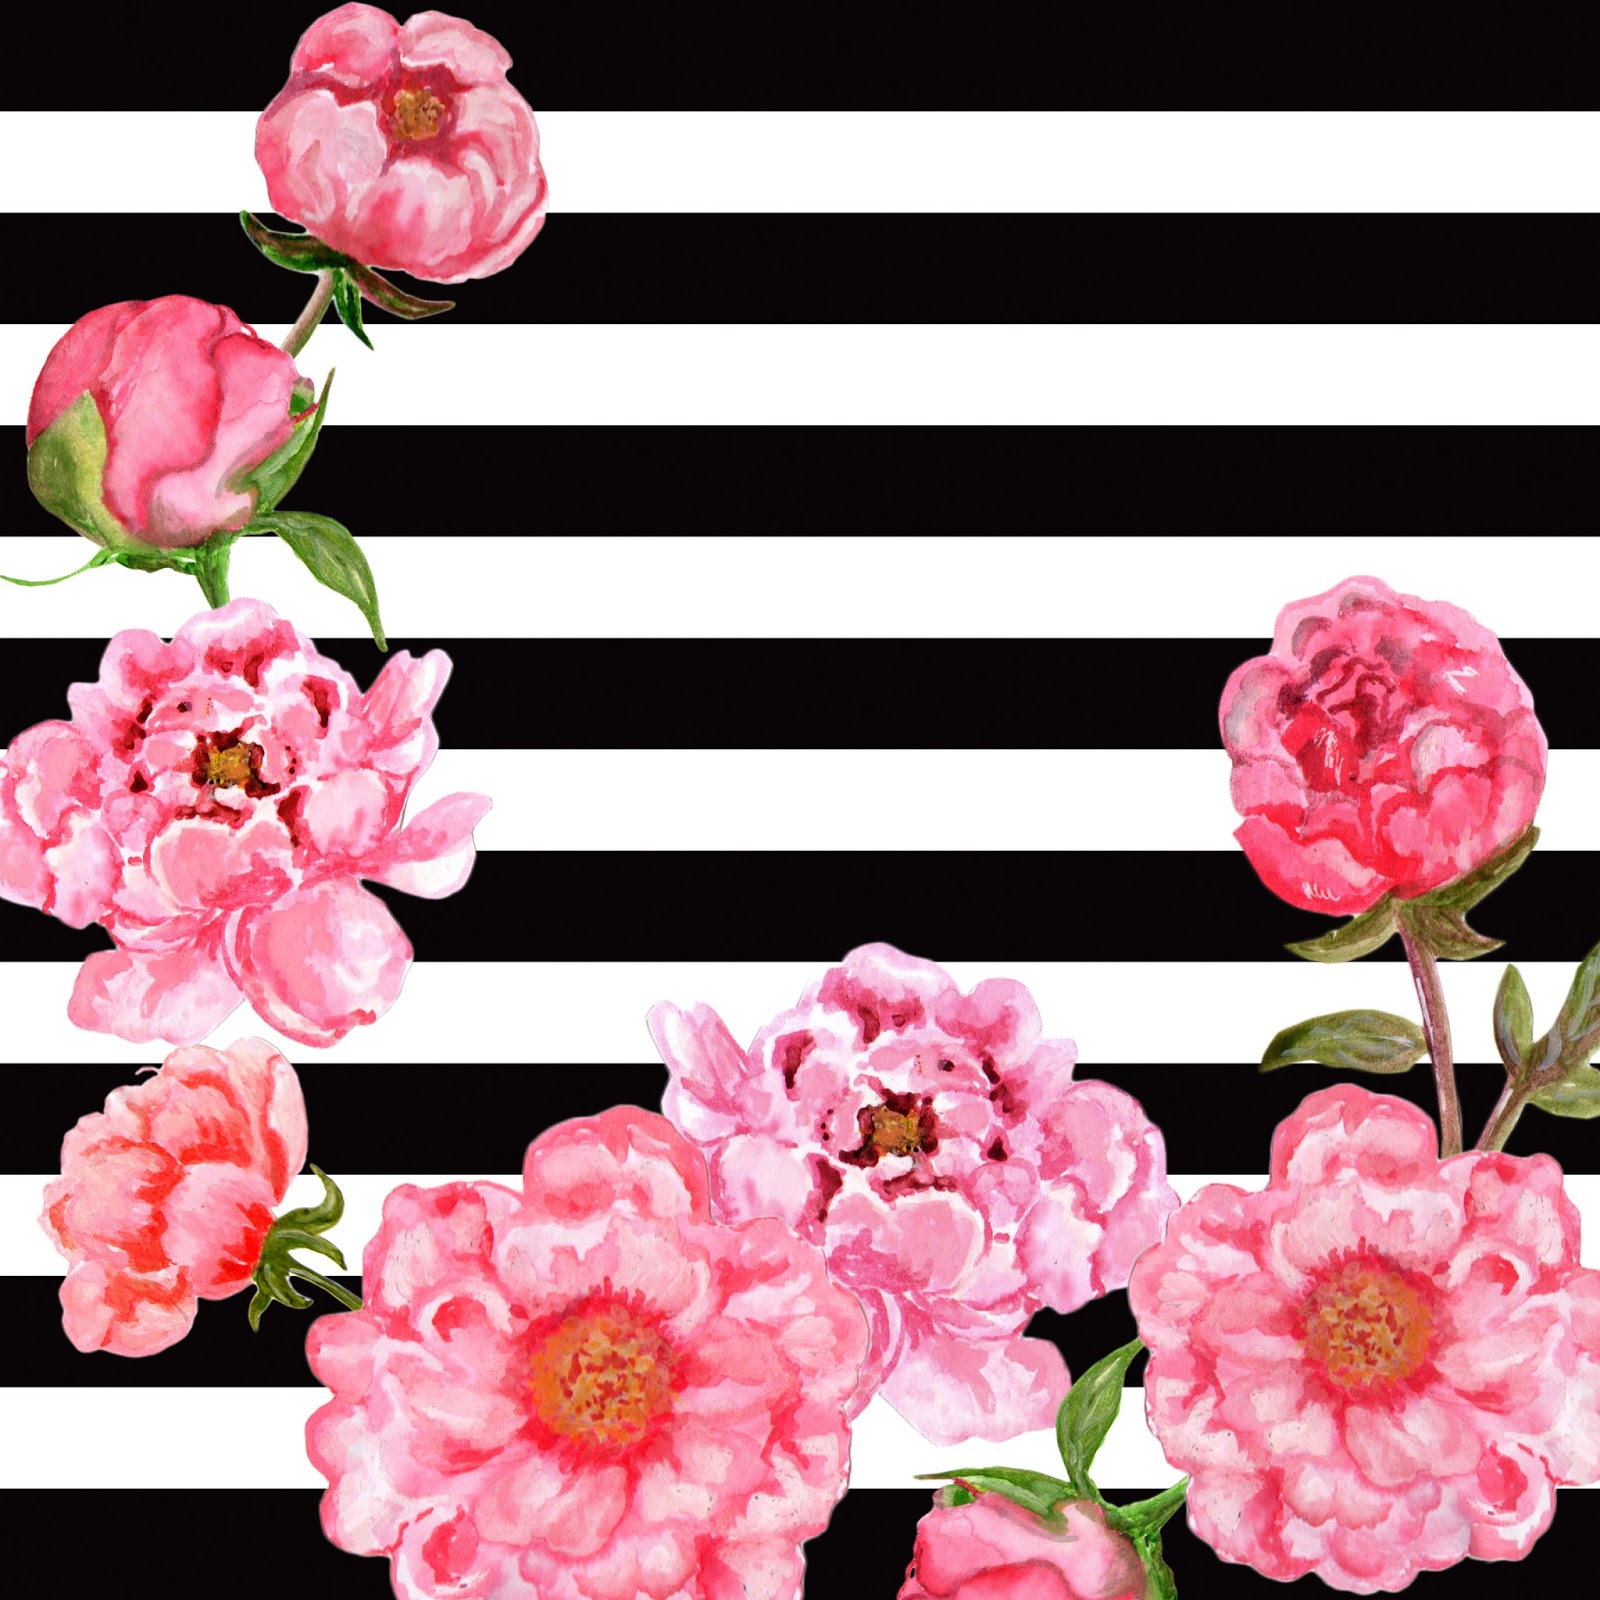 Doodlecraft: FREE Black & White Floral Background Patterns!